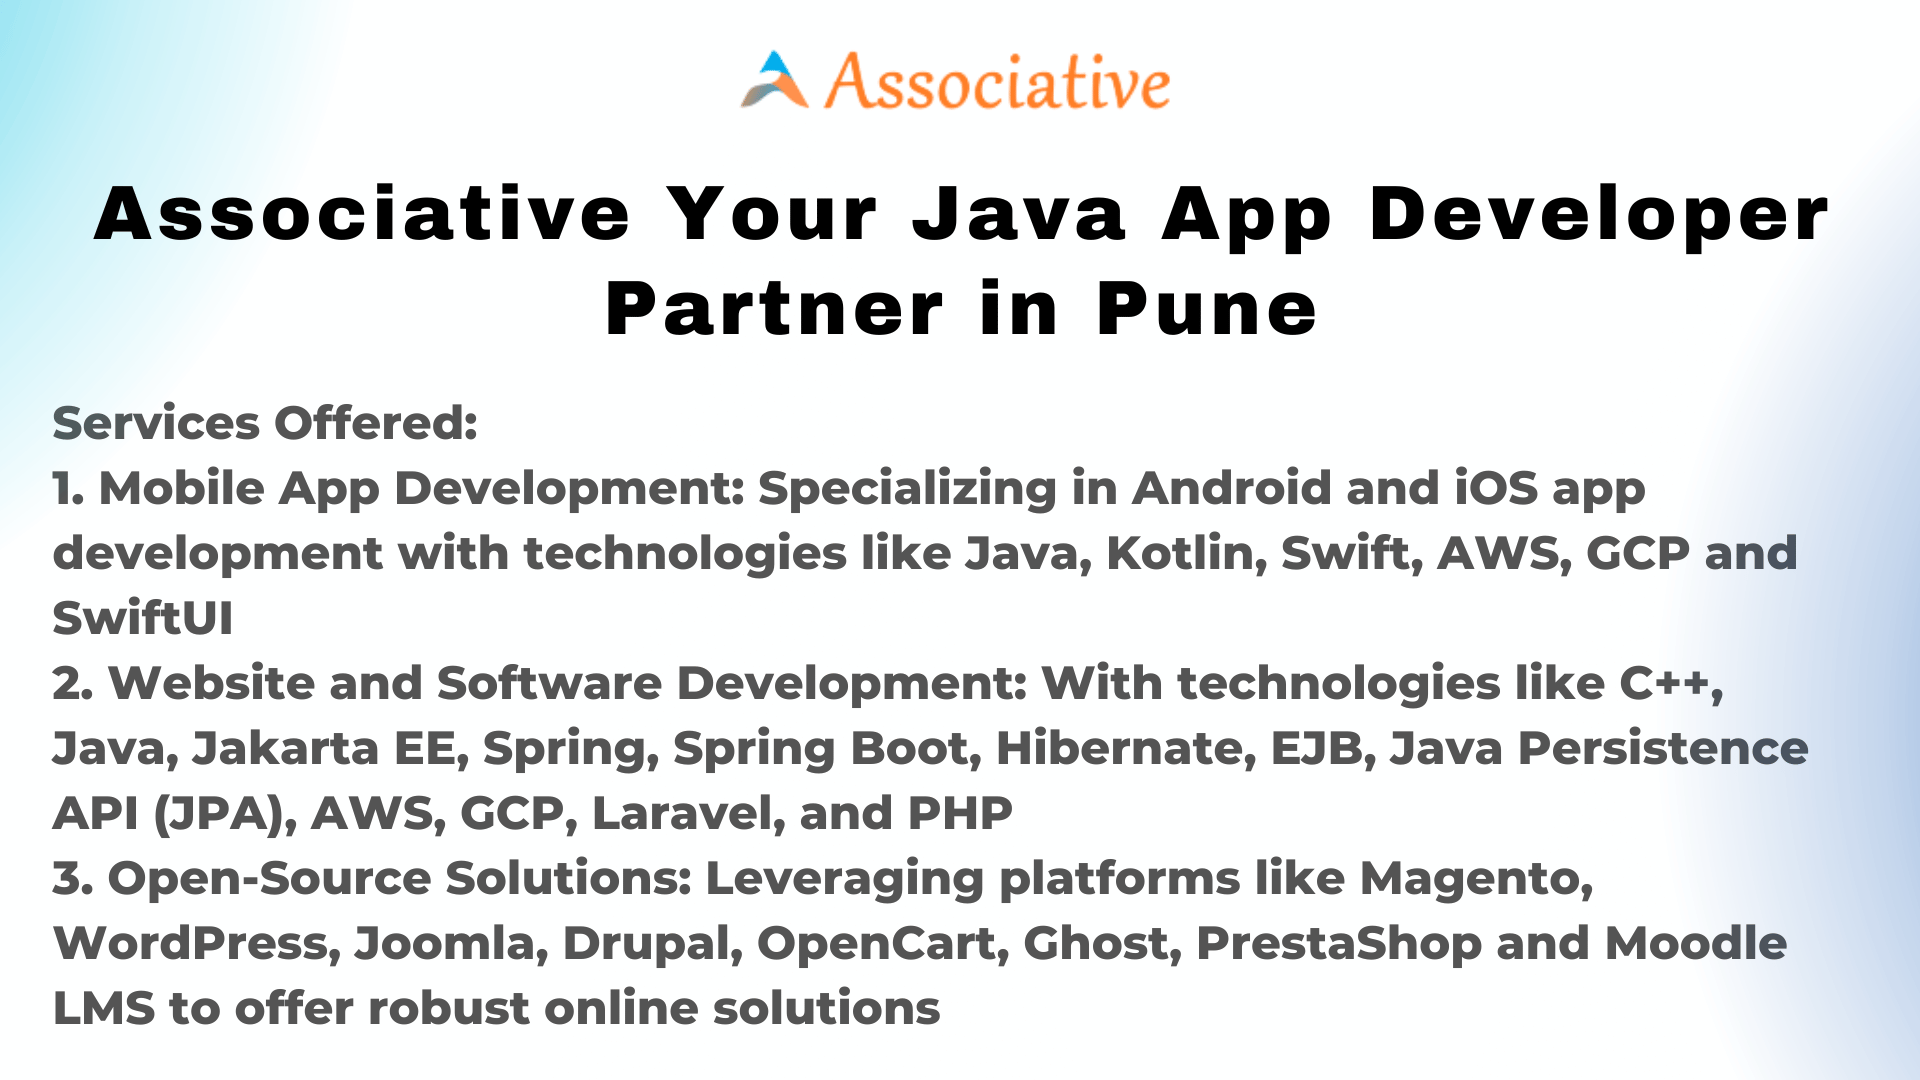 Associative Your Java App Developer Partner in Pune